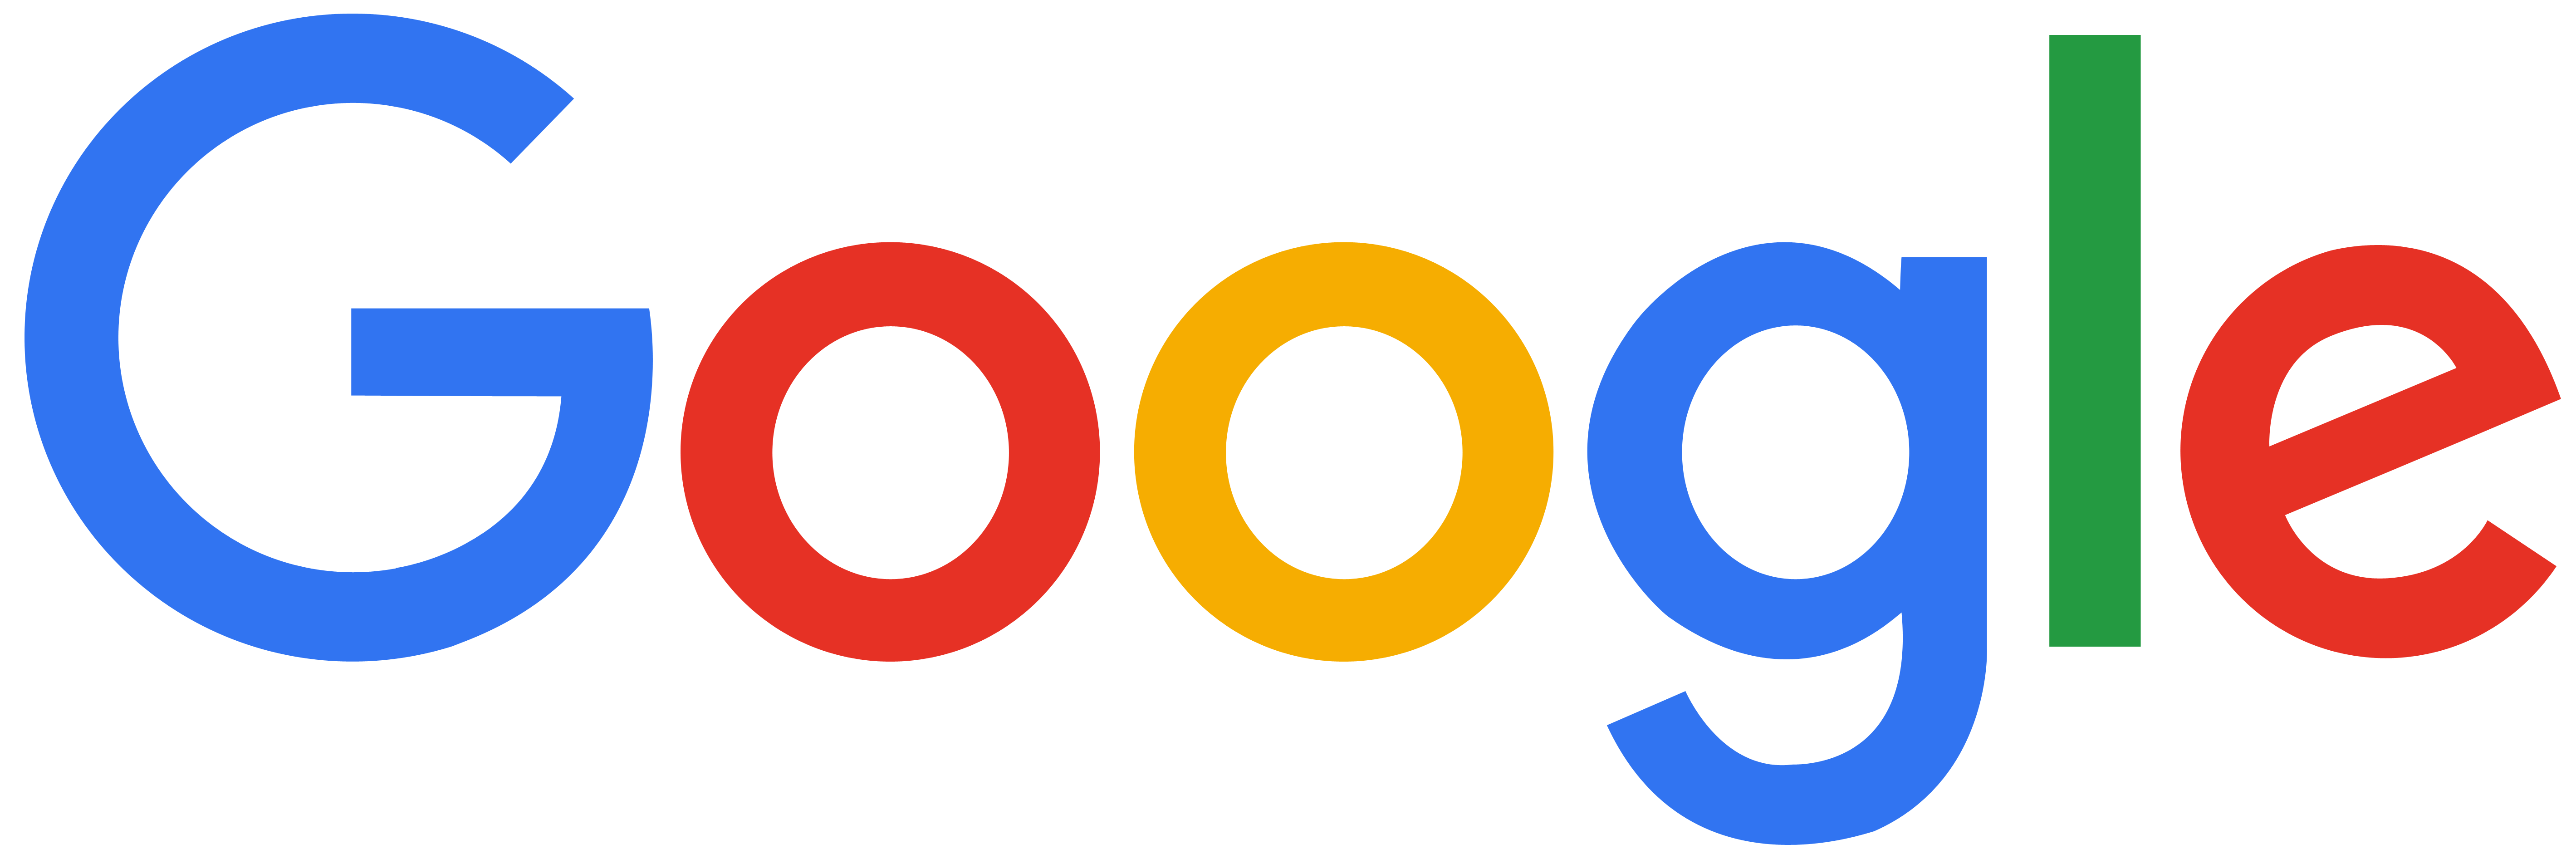 Google 2015 Logo High Resolution PNG by JovicaSmileski on ... - Google Search Logo